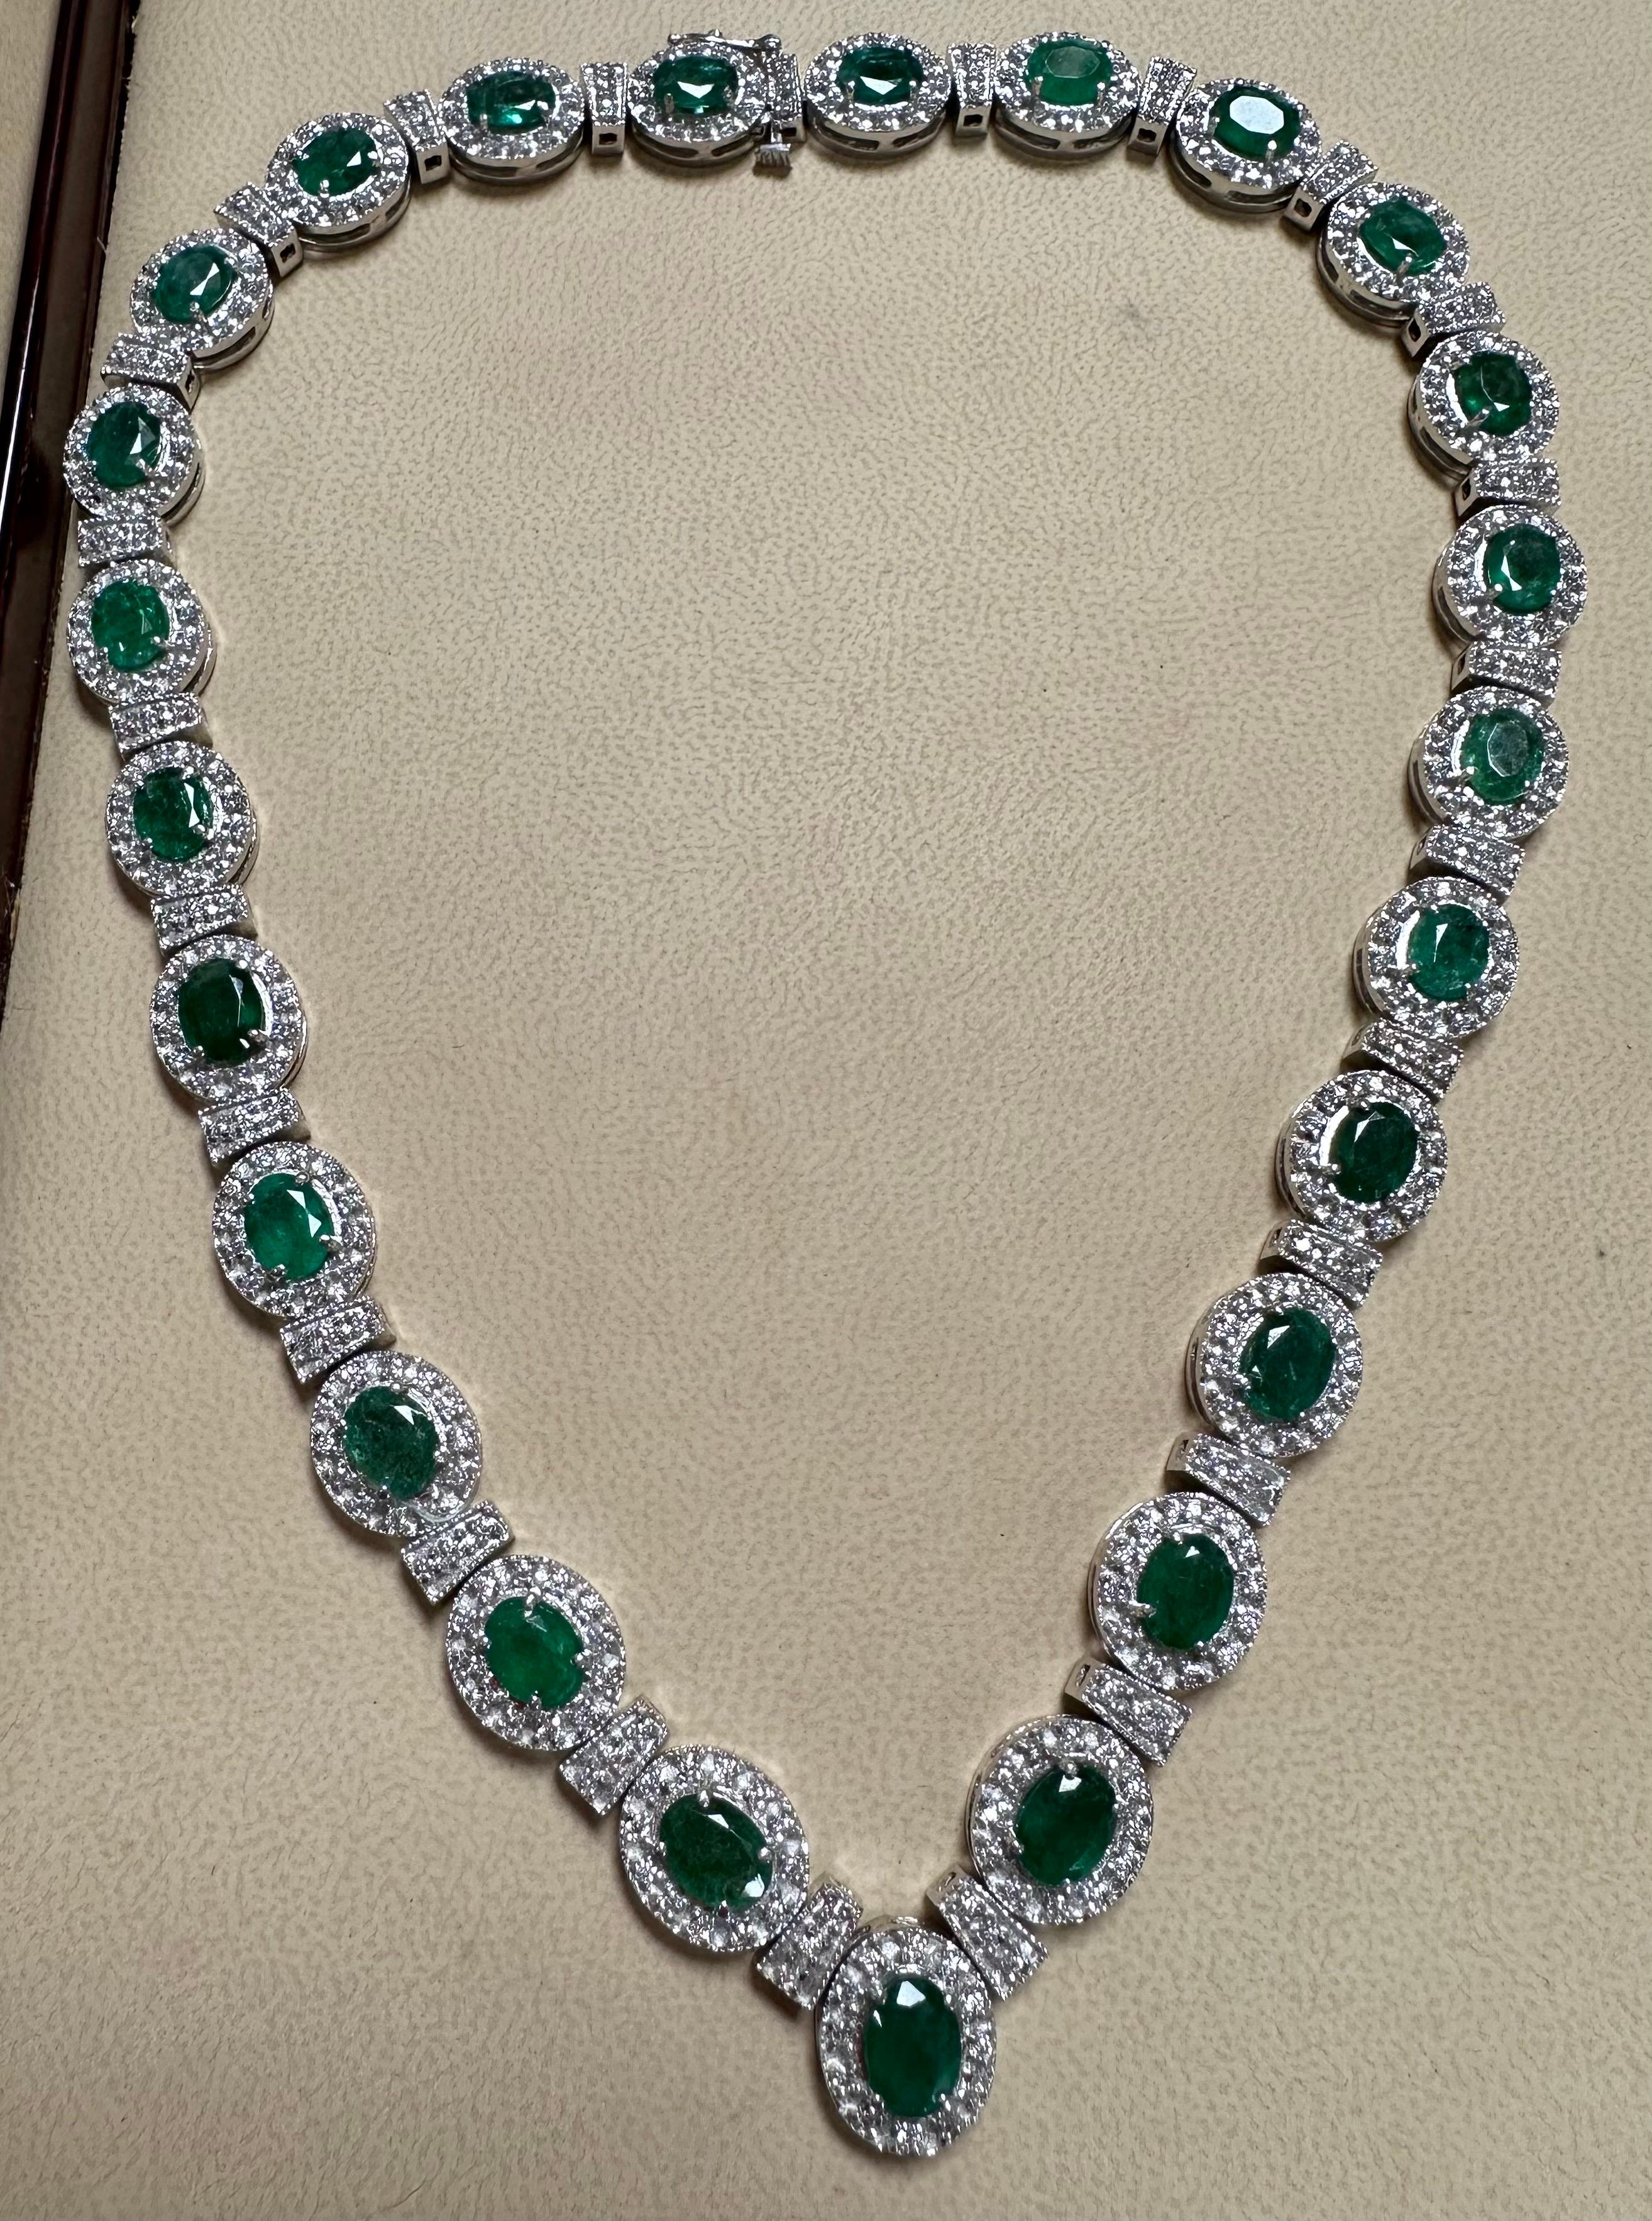 28 Carat Oval Shape Natural Emerald & 5 Carat Diamond Necklace in 14 Karat Gold For Sale 8